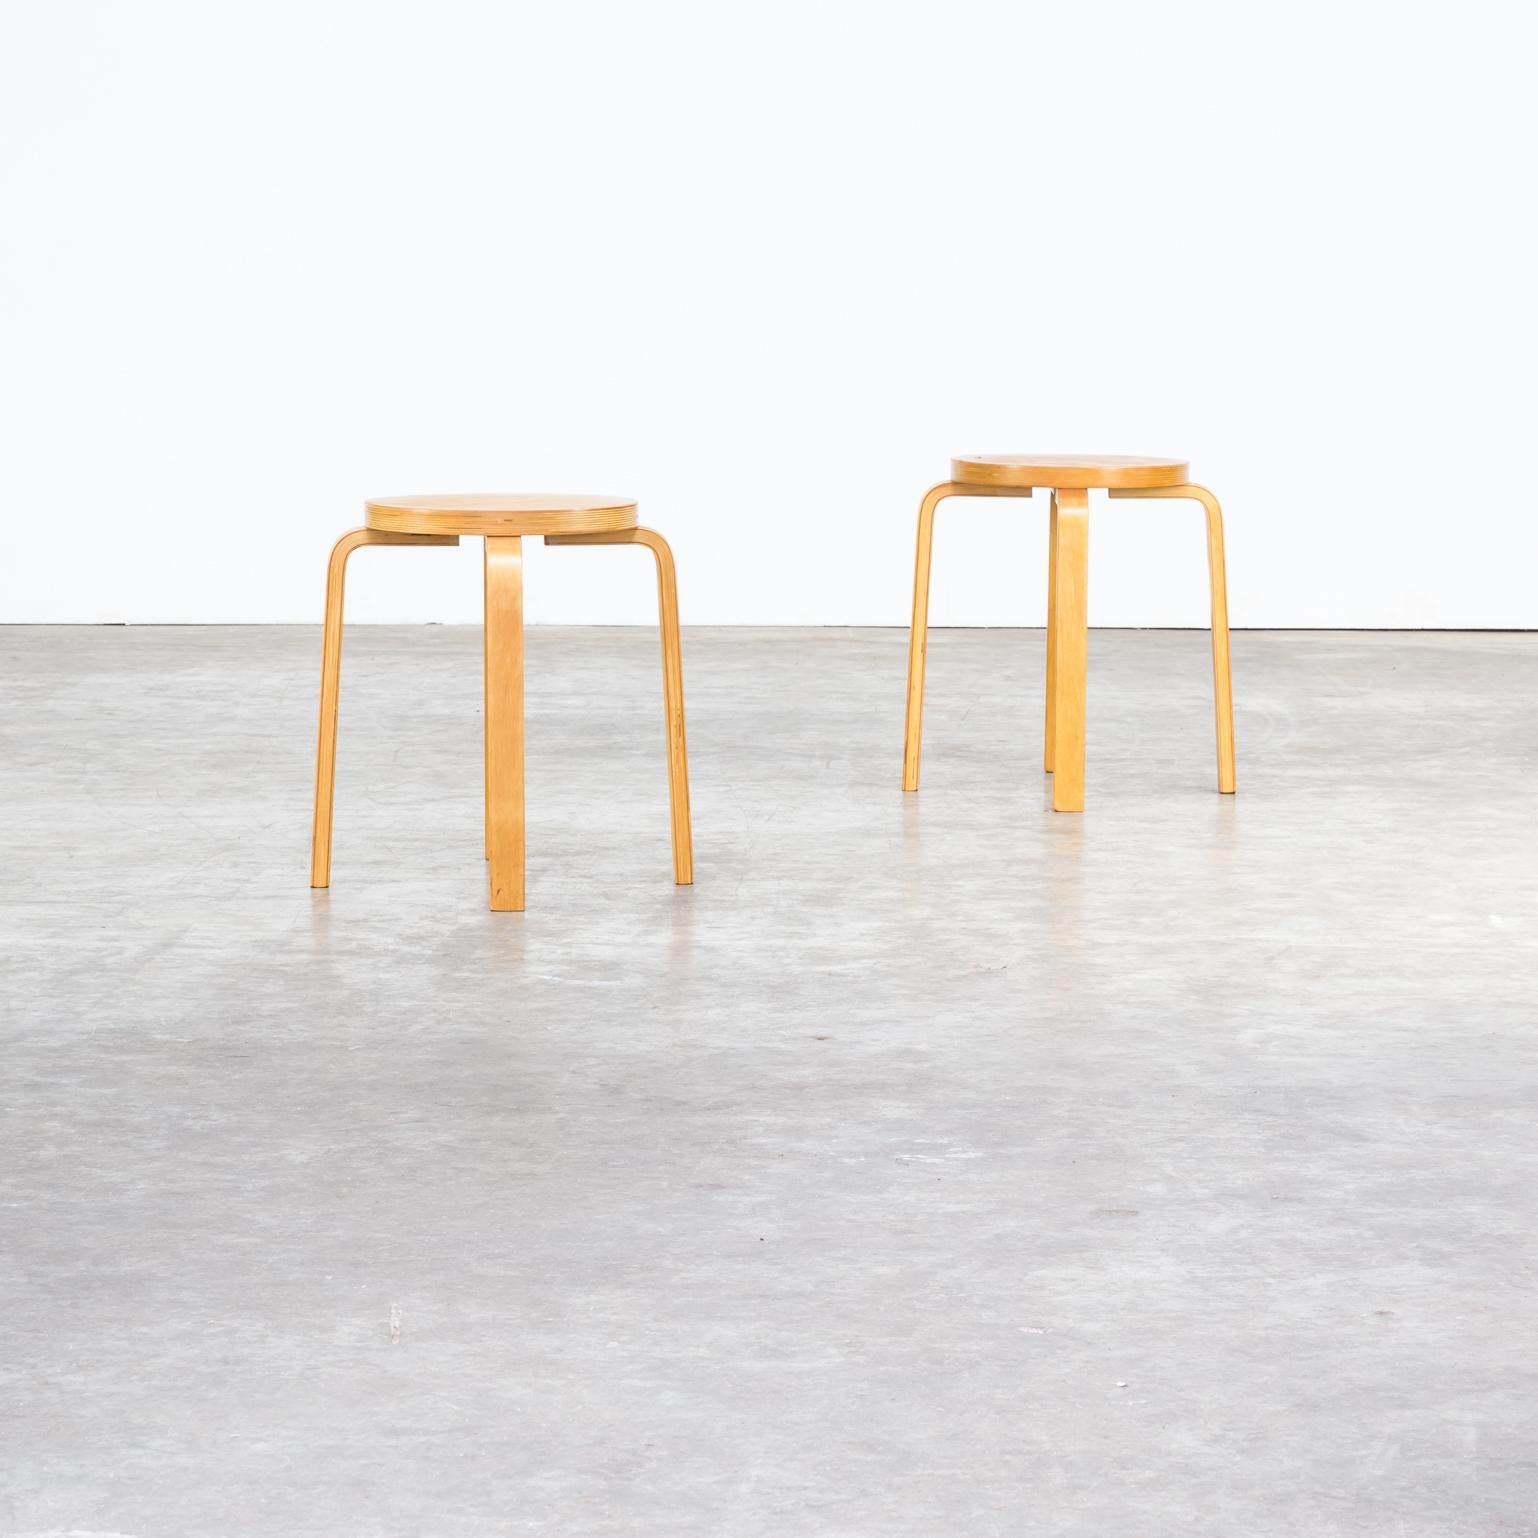 1960s Alvar Aatlo ‘E60’ plywood stool for Artek, set of 2. Late edition Alvar Aalto, beautiful brown legs.